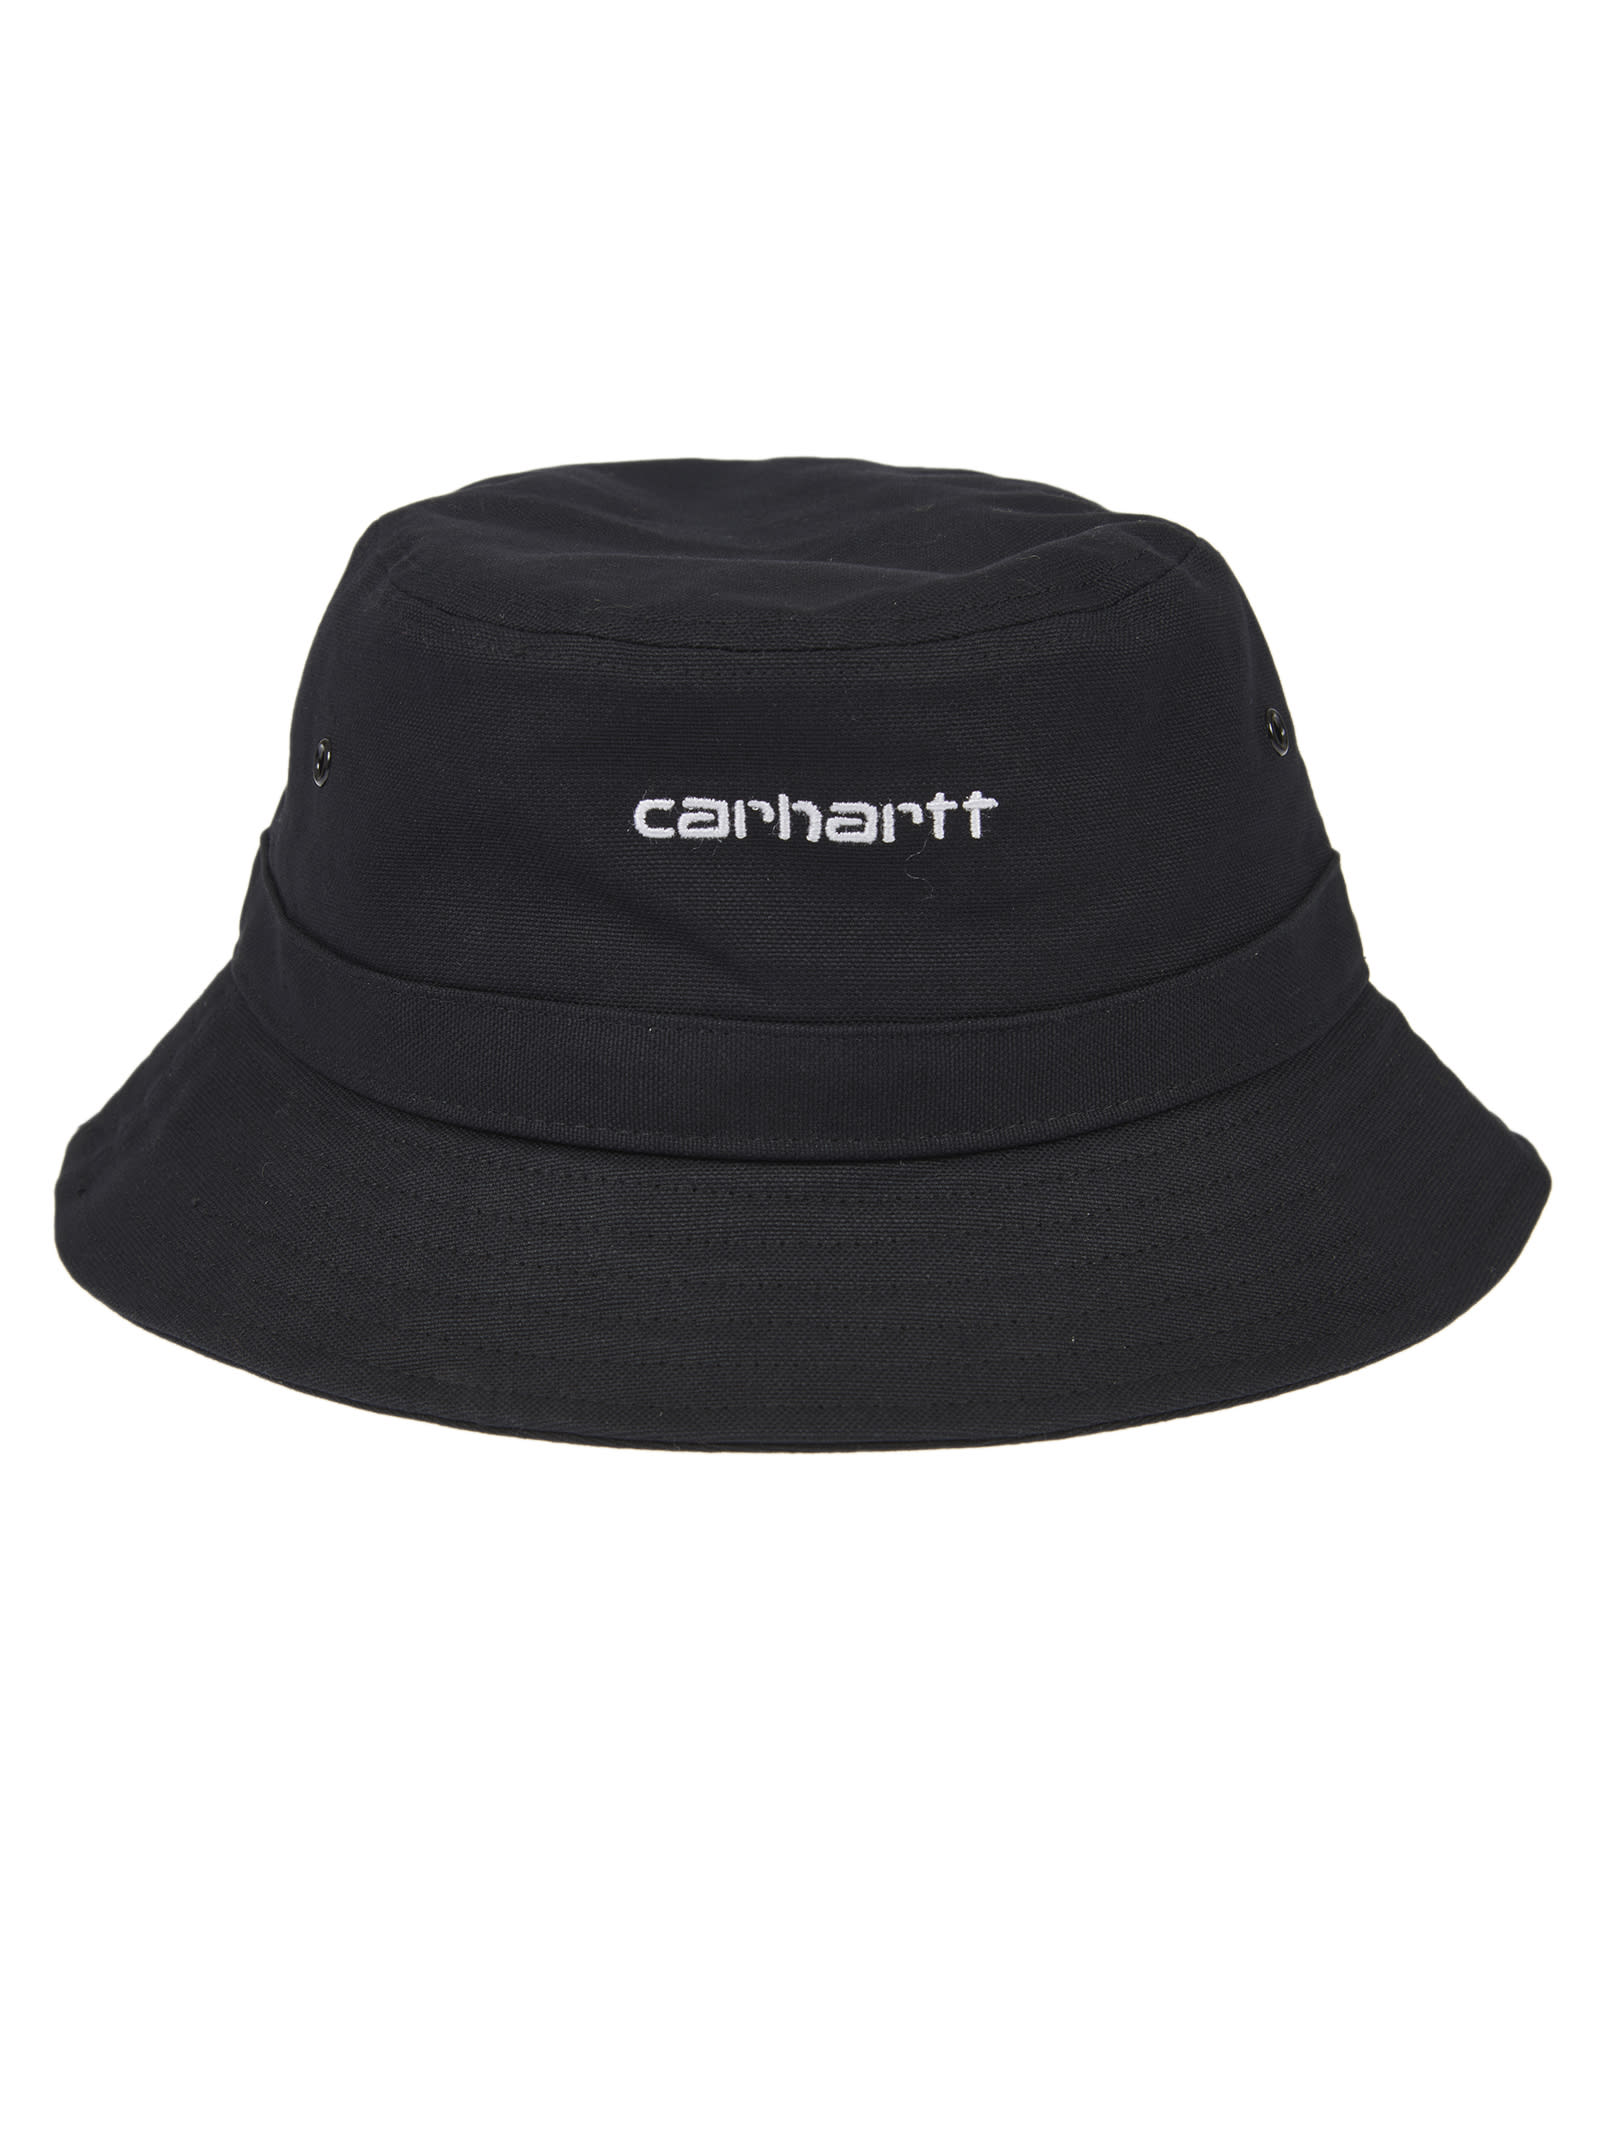 Carhartt Embroidered Logo Bucket Hat